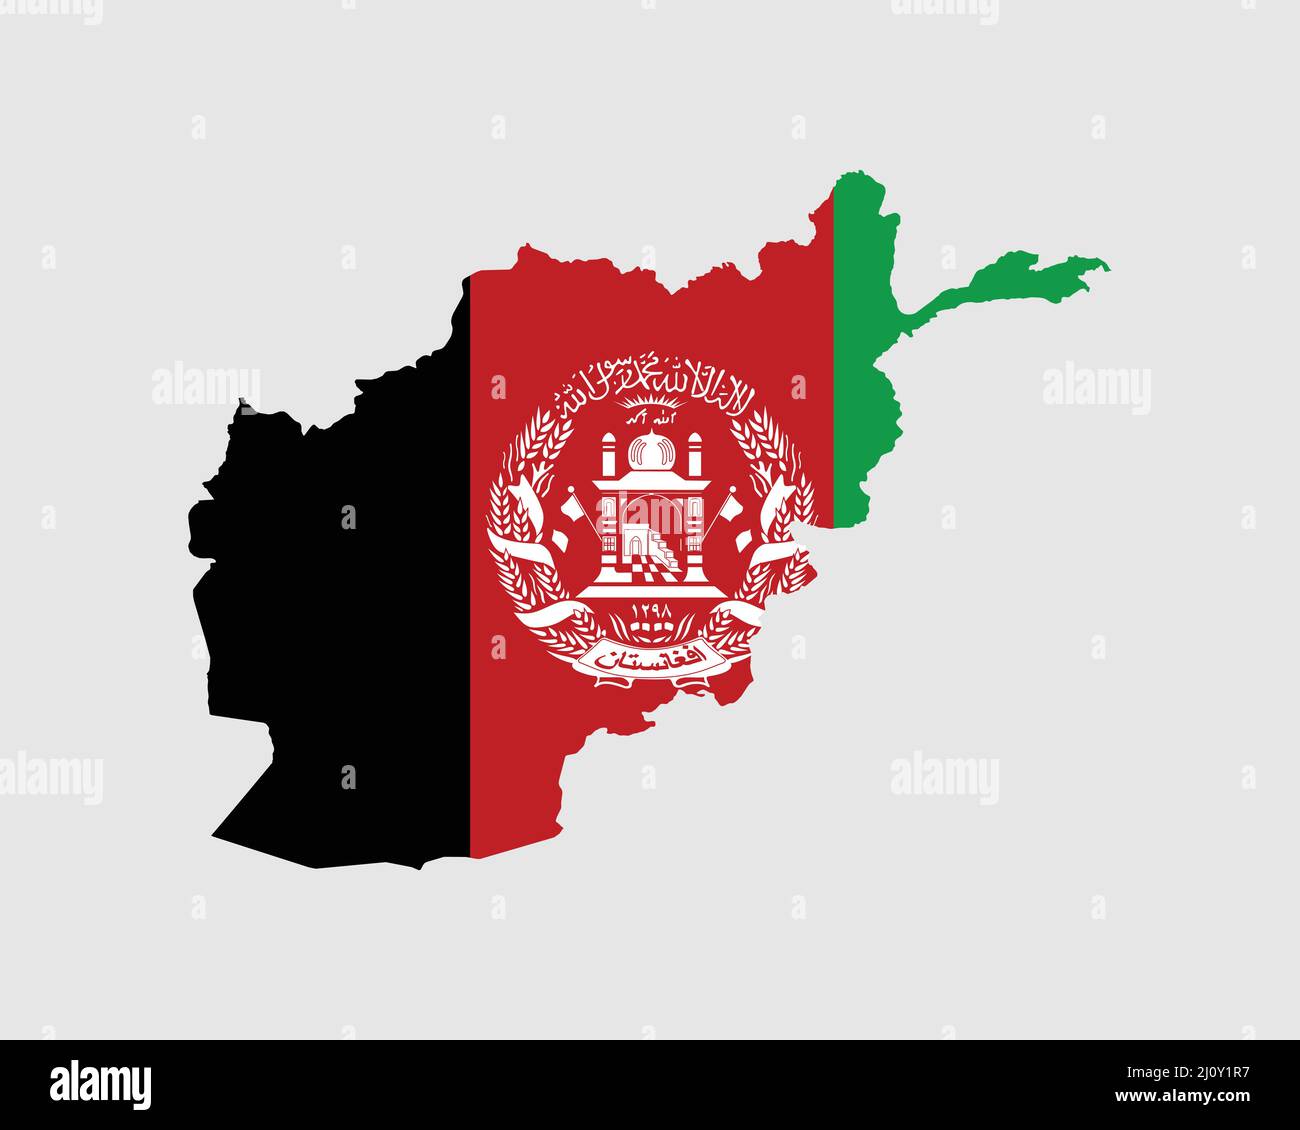 Afghanische Landkarte Flagge. Karte der Islamischen Republik Afghanistan mit Landesflagge. Vektorgrafik. Stock Vektor